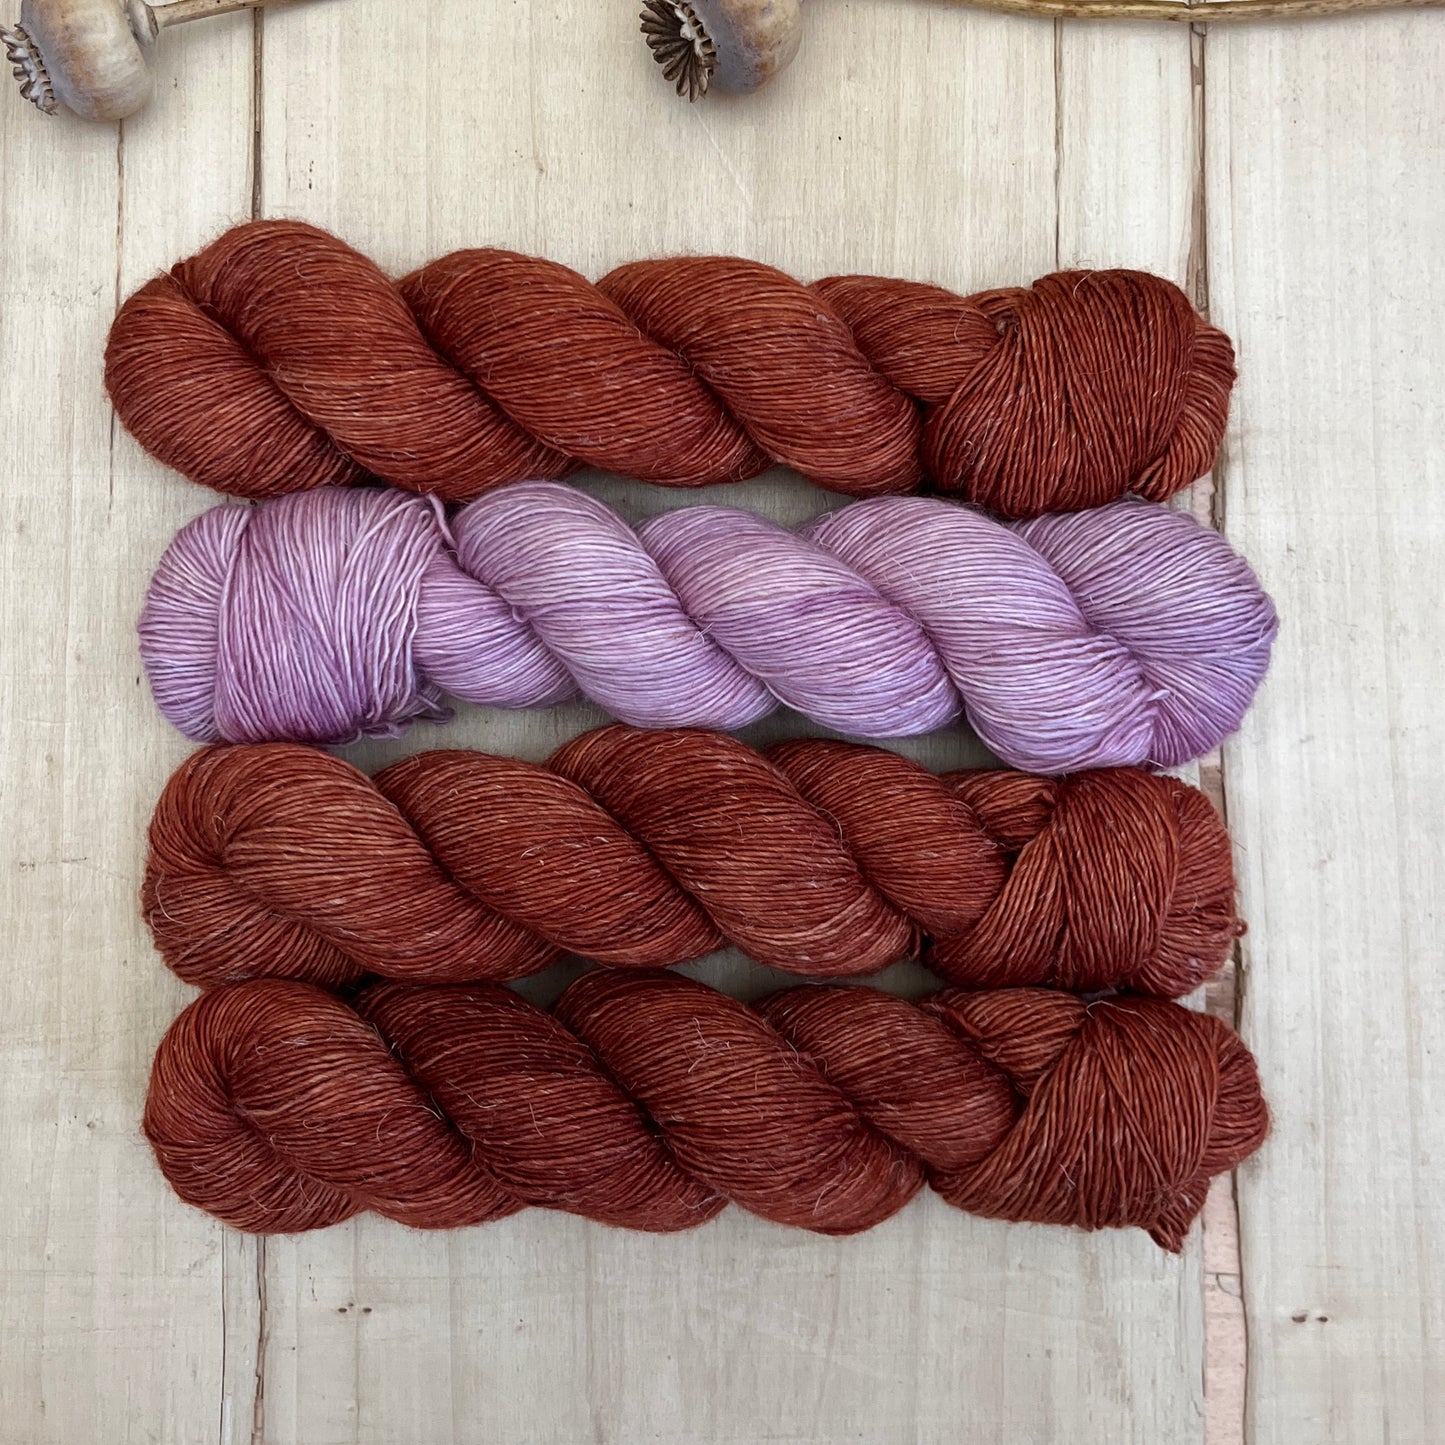 boyland knitworks - autumn alpine - yarn pack - #5